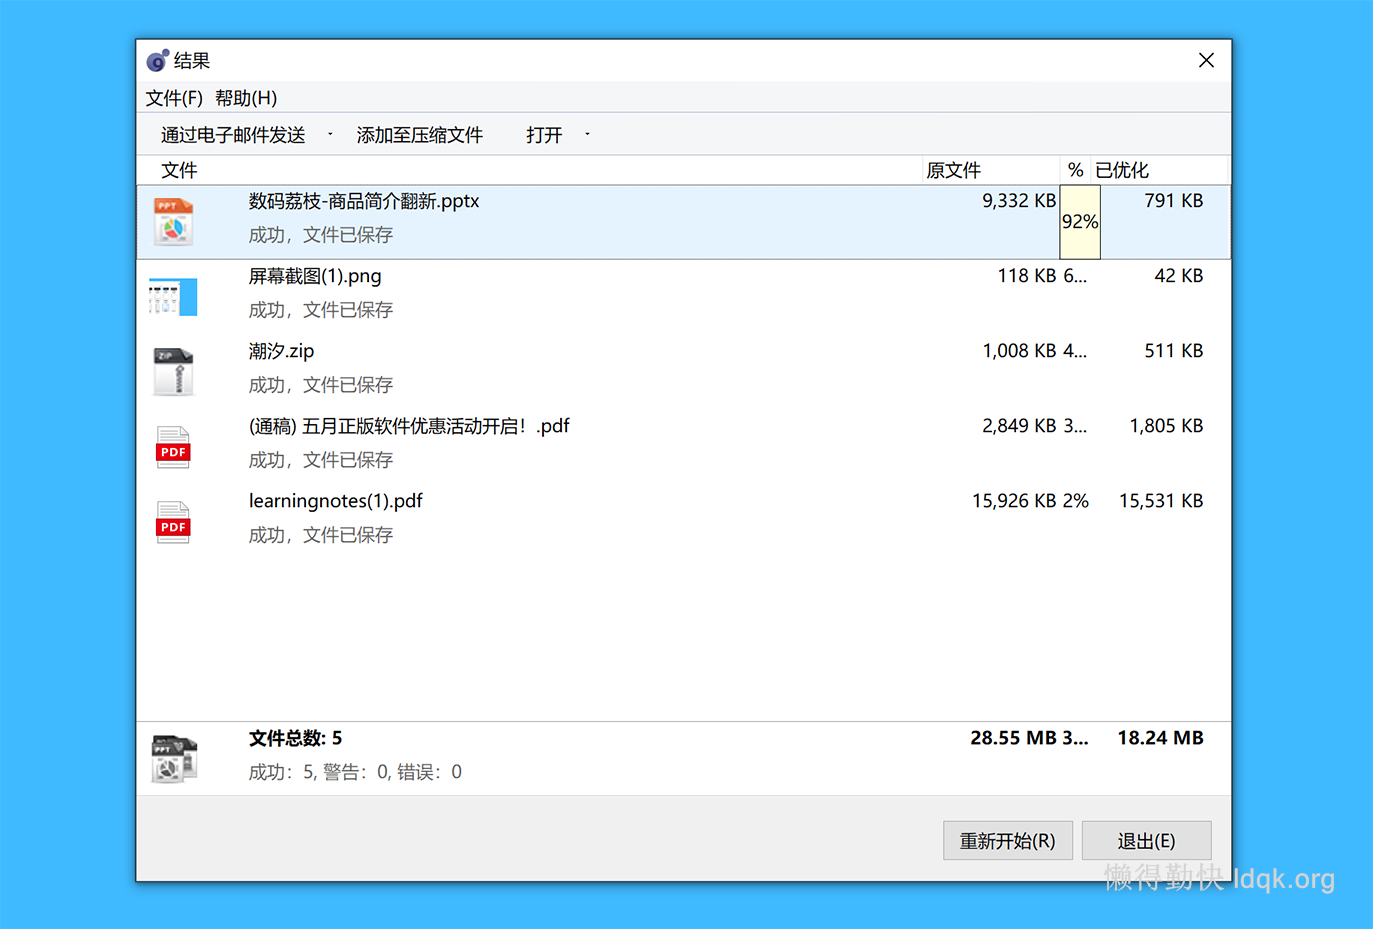 NXPowerLite Desktop 10.0.1 download